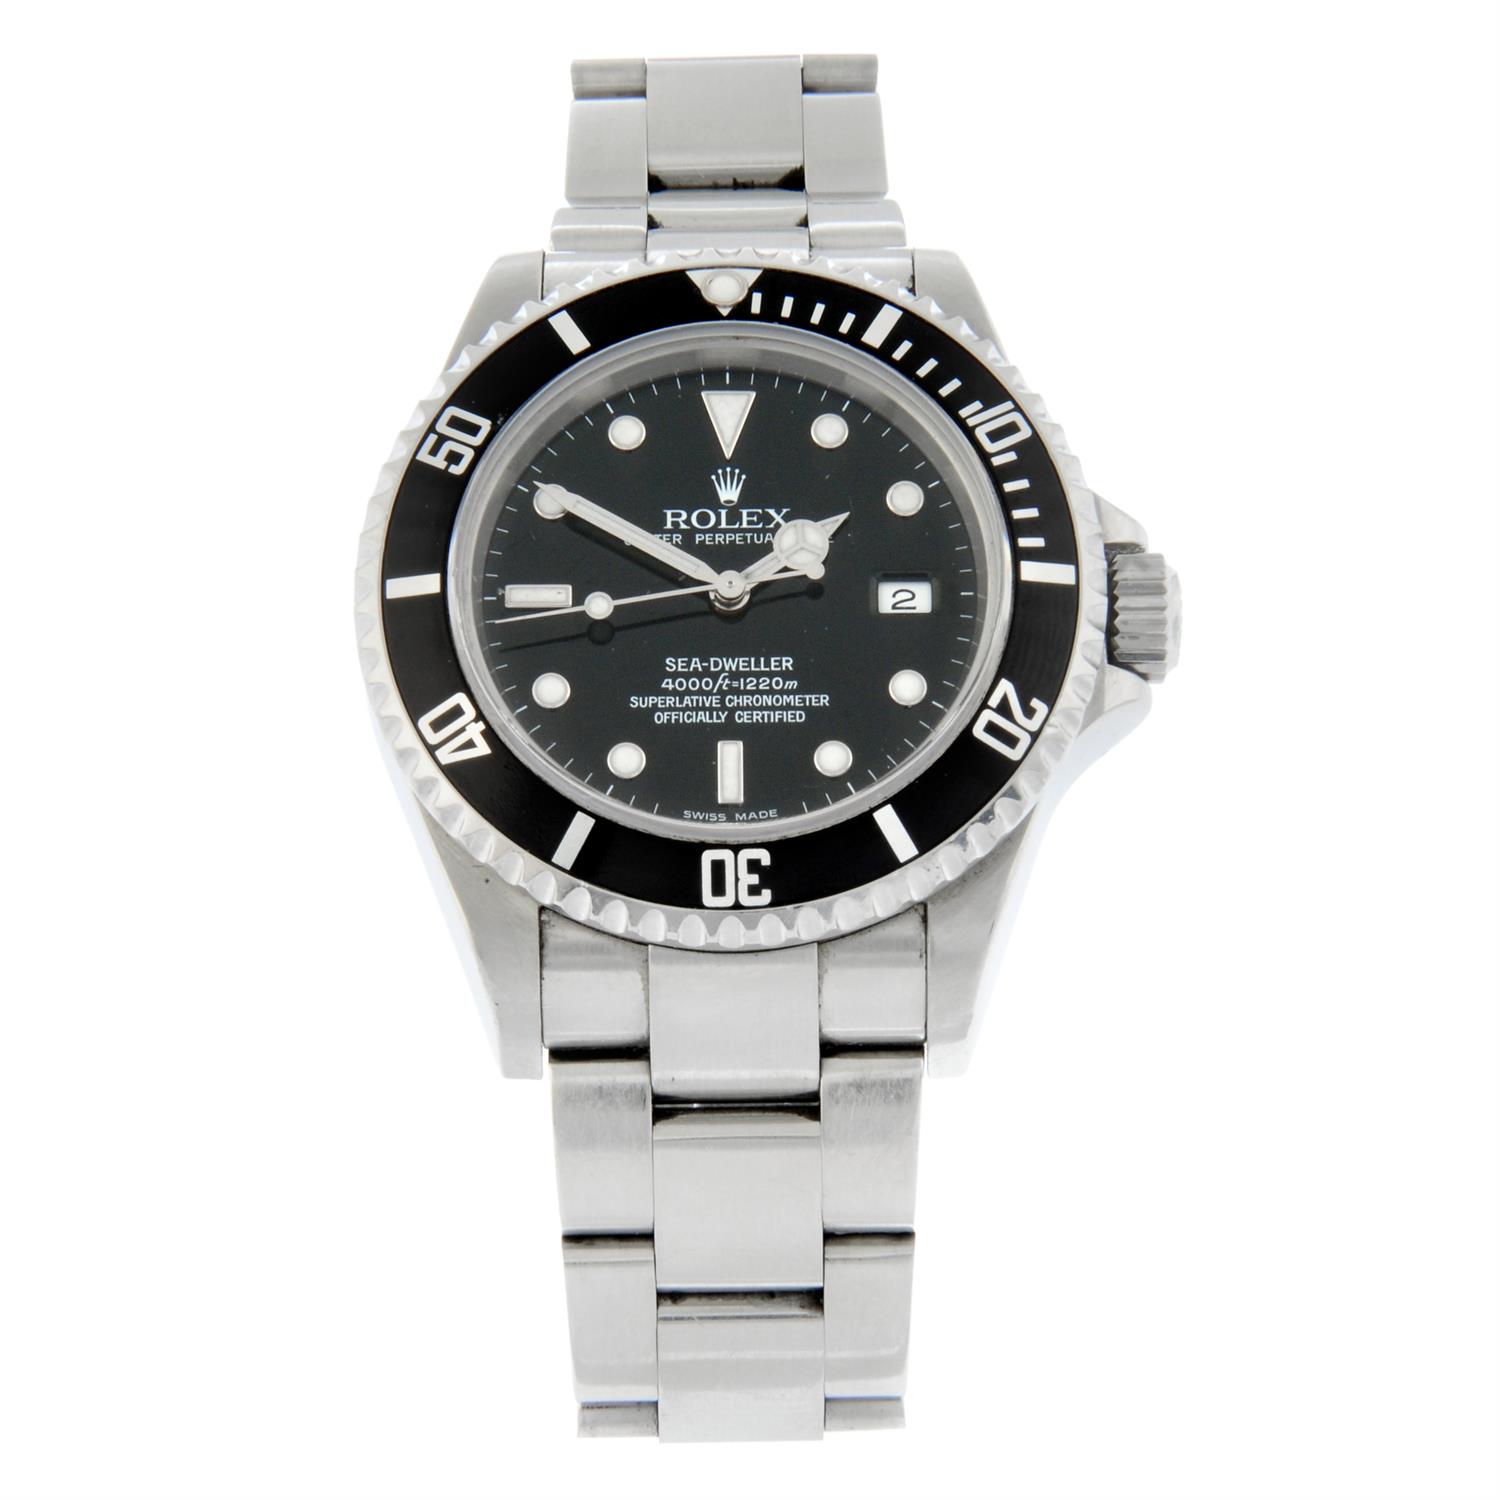 Rolex - an Oyster Perpetual Sea-Dweller watch, 40mm.